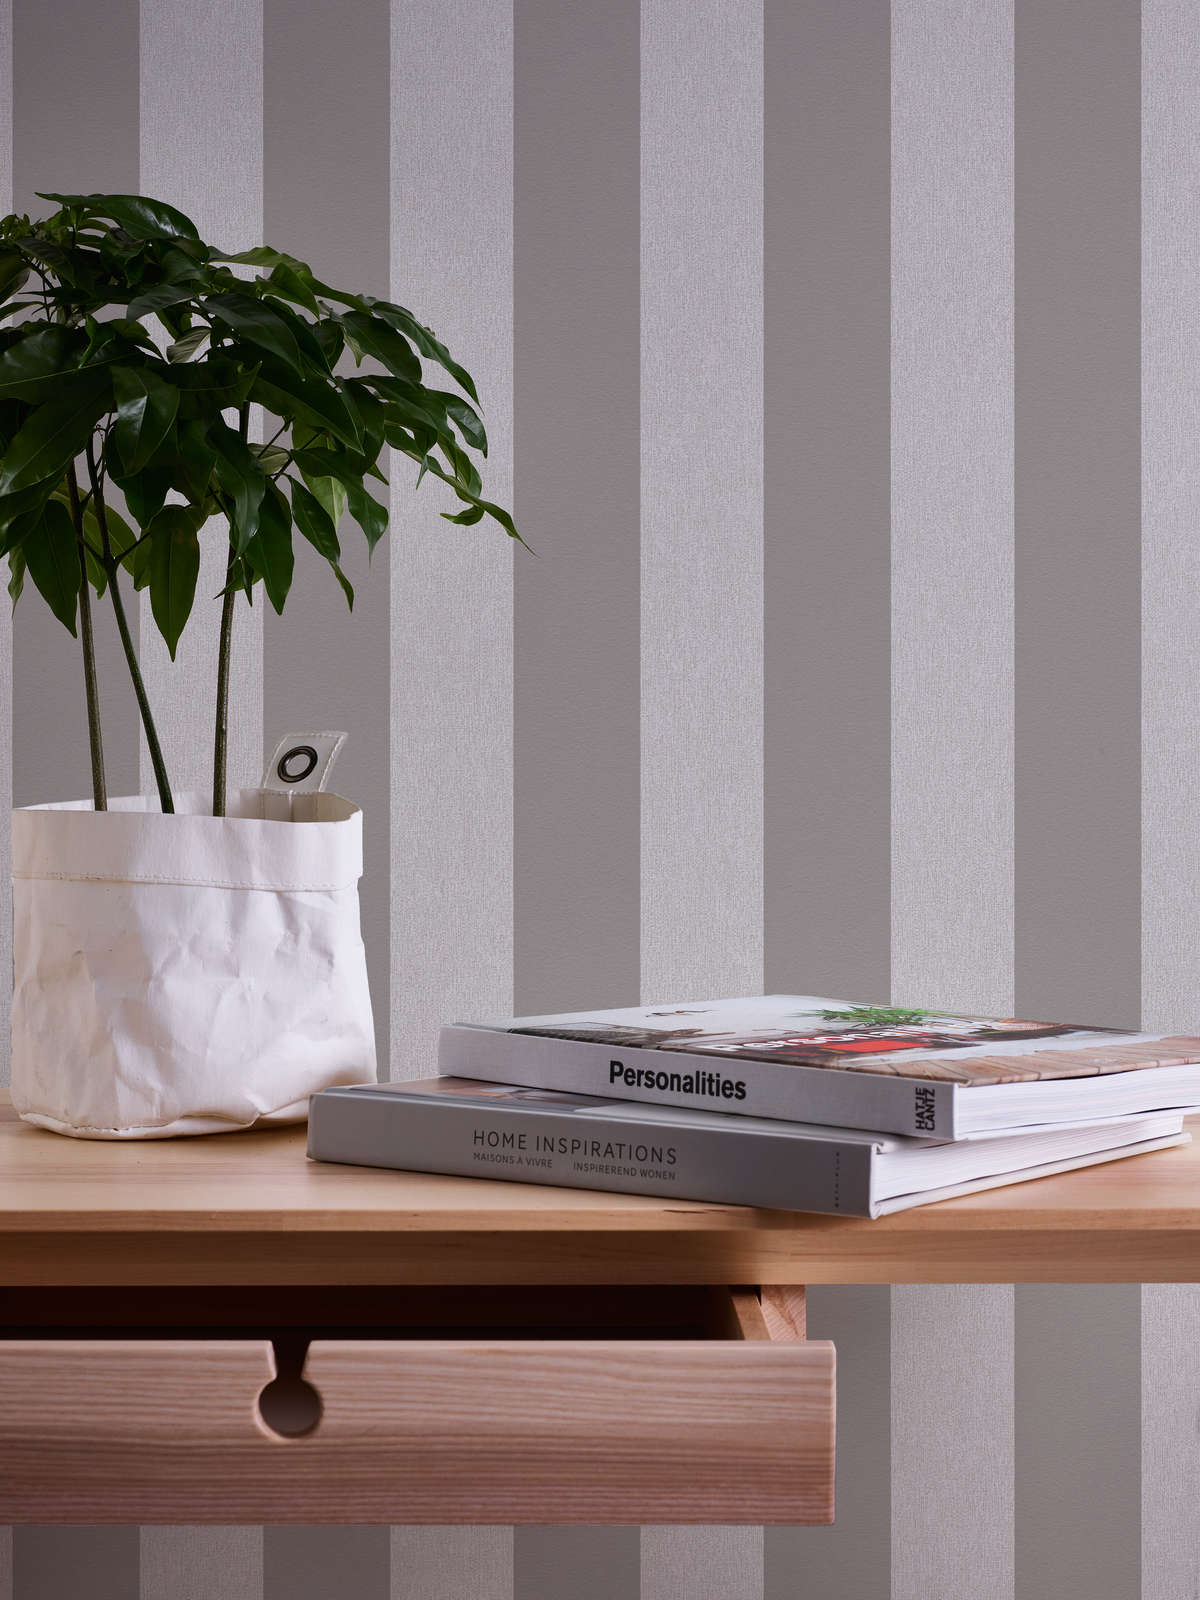             Wallpaper with textured optics & stripes pattern - grey, light grey
        